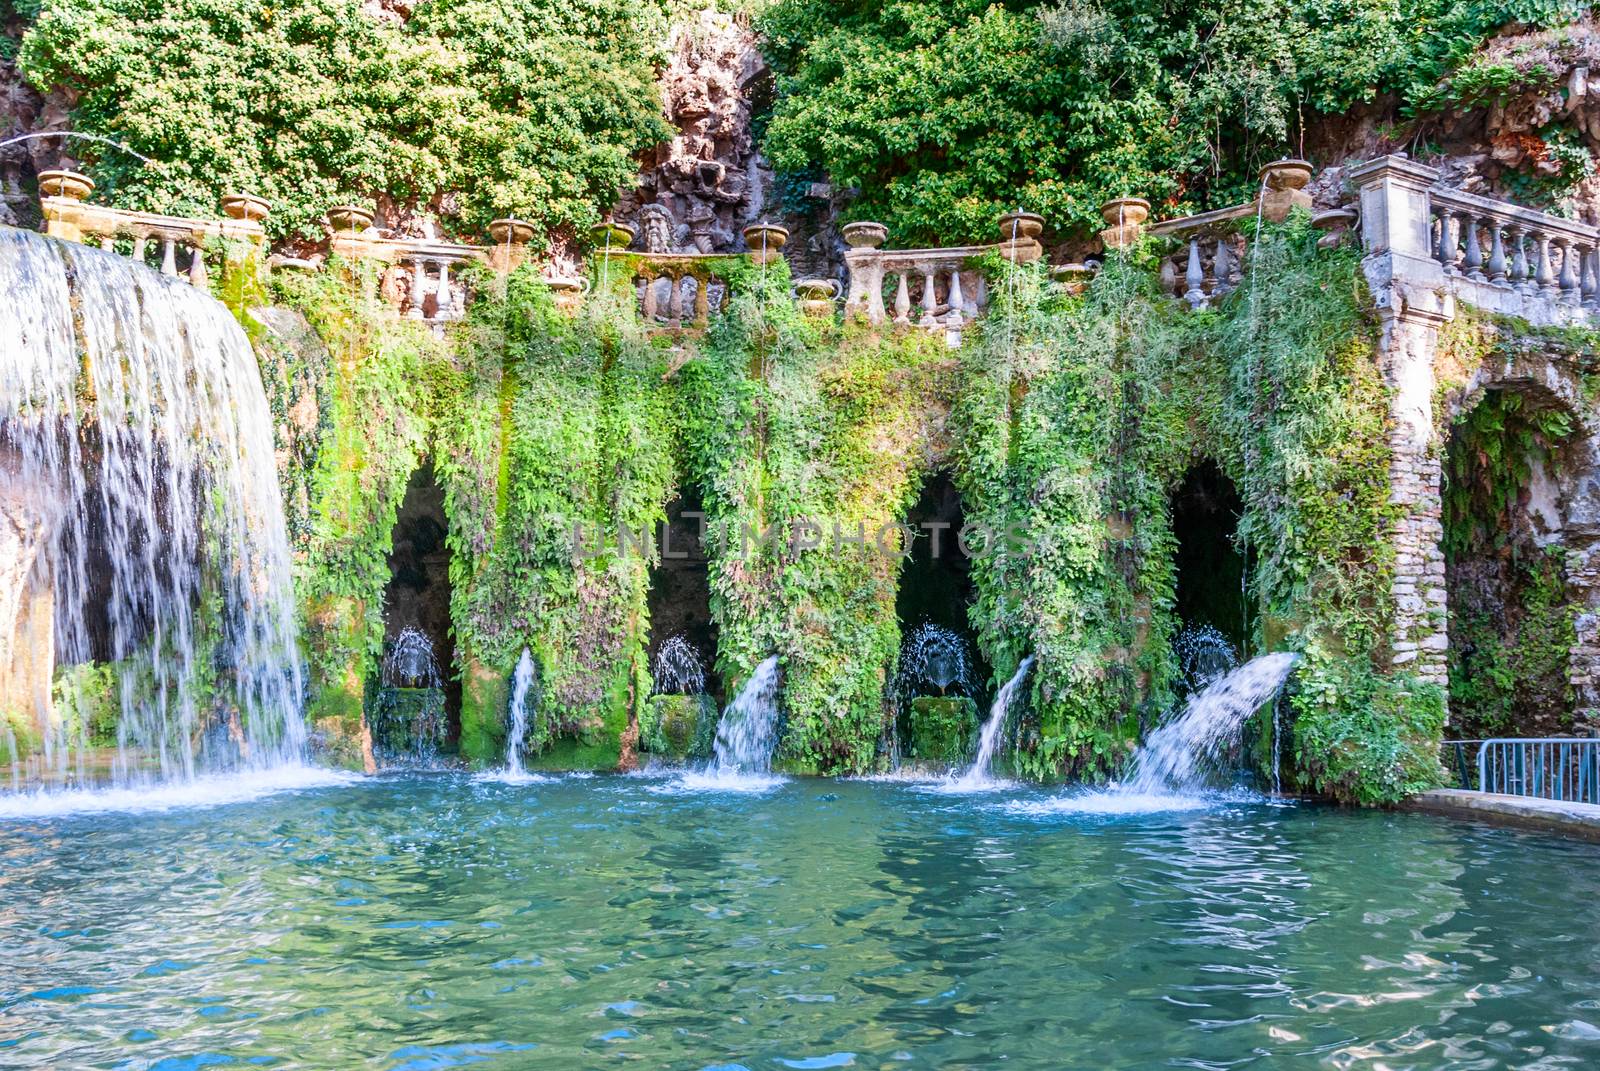 Villa D Este gardens in Tivoli - Oval Fountain local landmark of by Zhukow